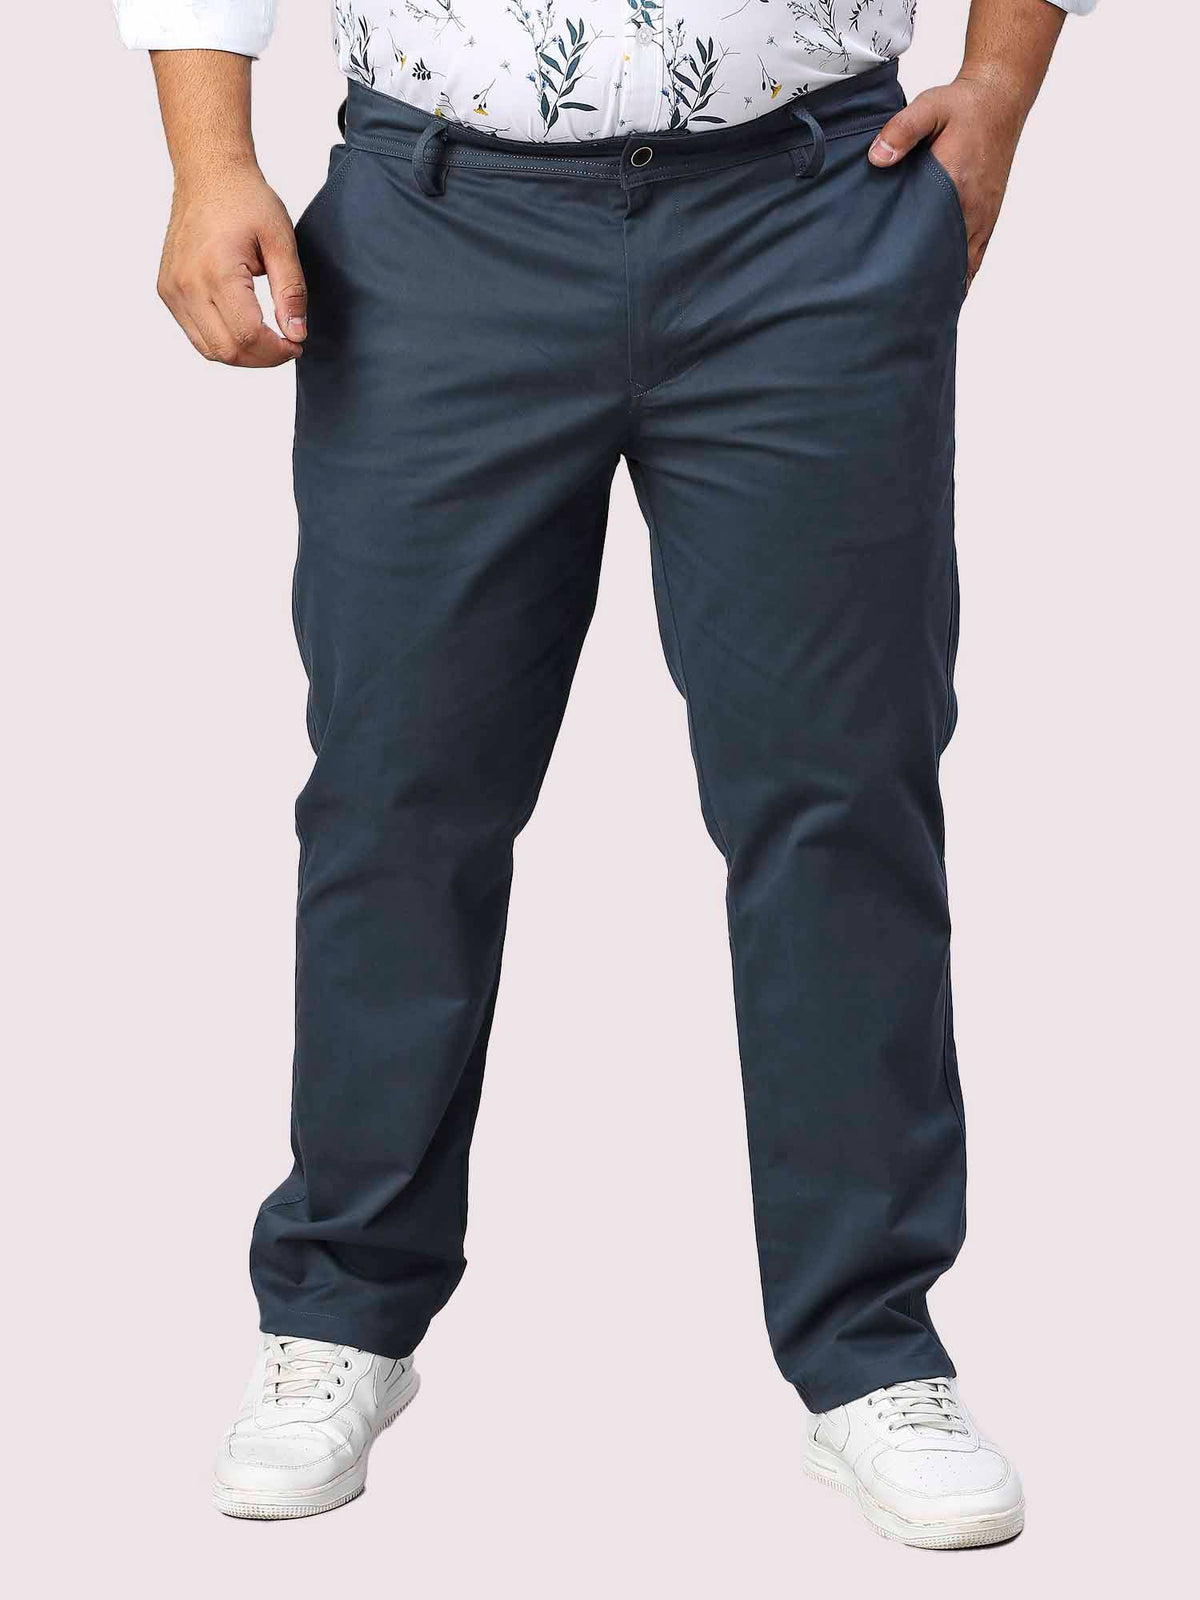 Blue Solid Cotton Trouser Men's Plus Size - Guniaa Fashions